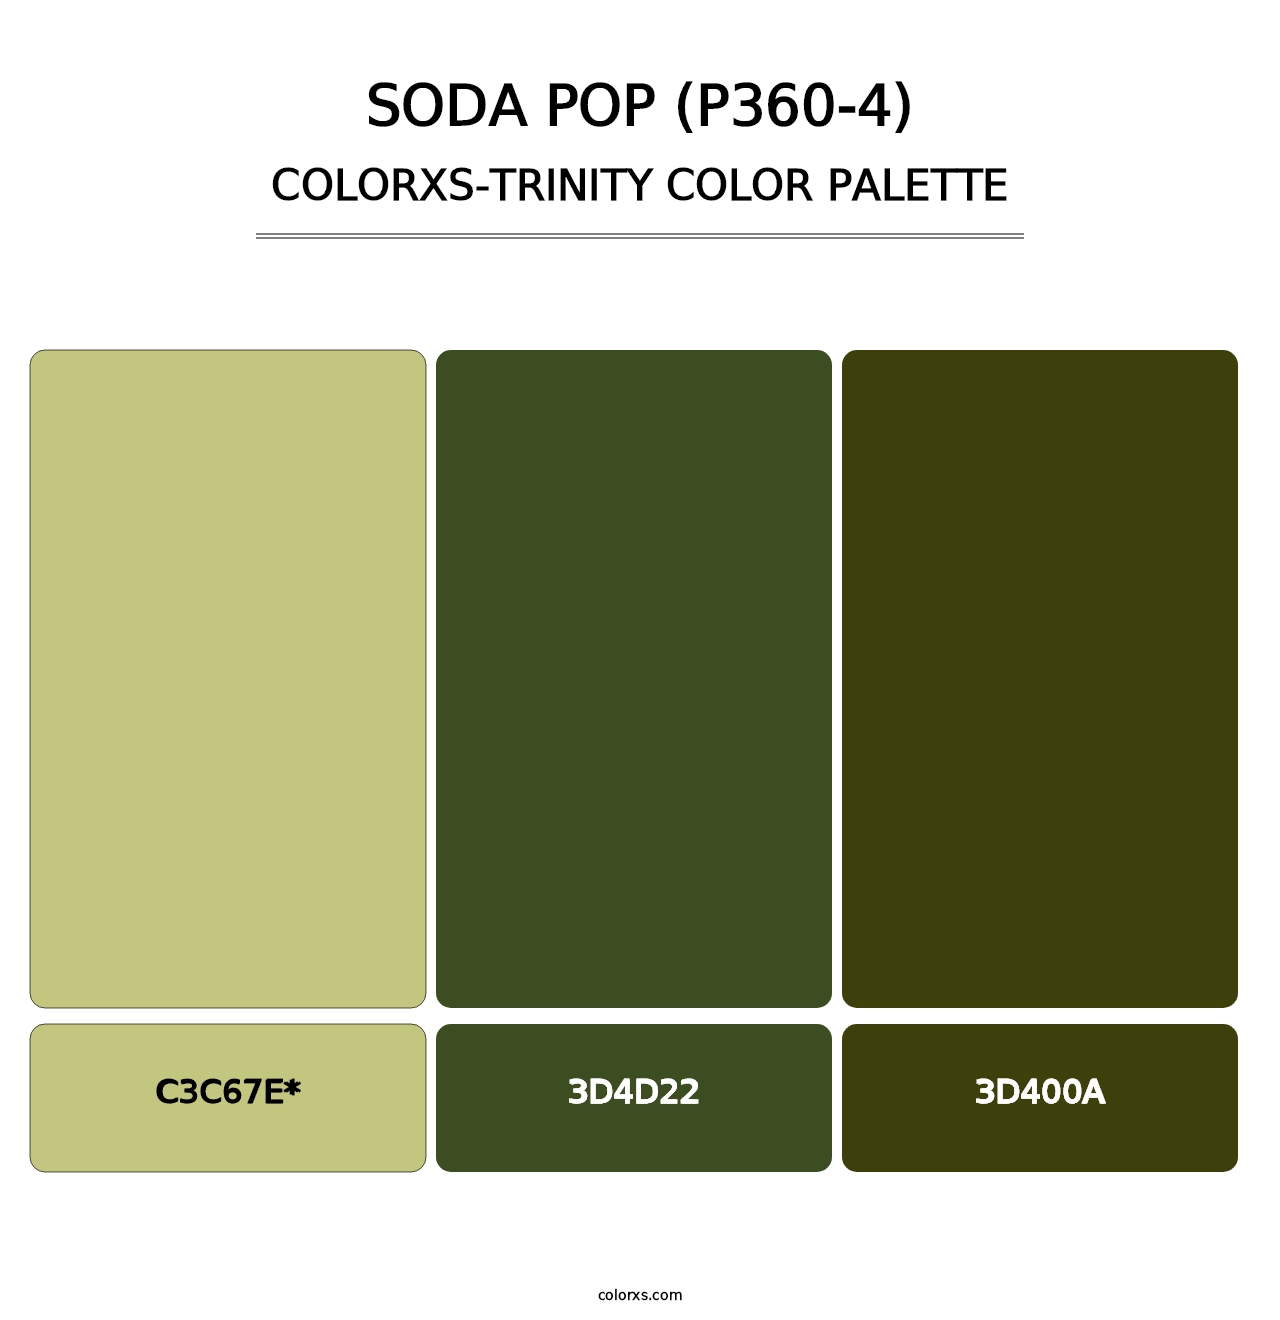 Soda Pop (P360-4) - Colorxs Trinity Palette